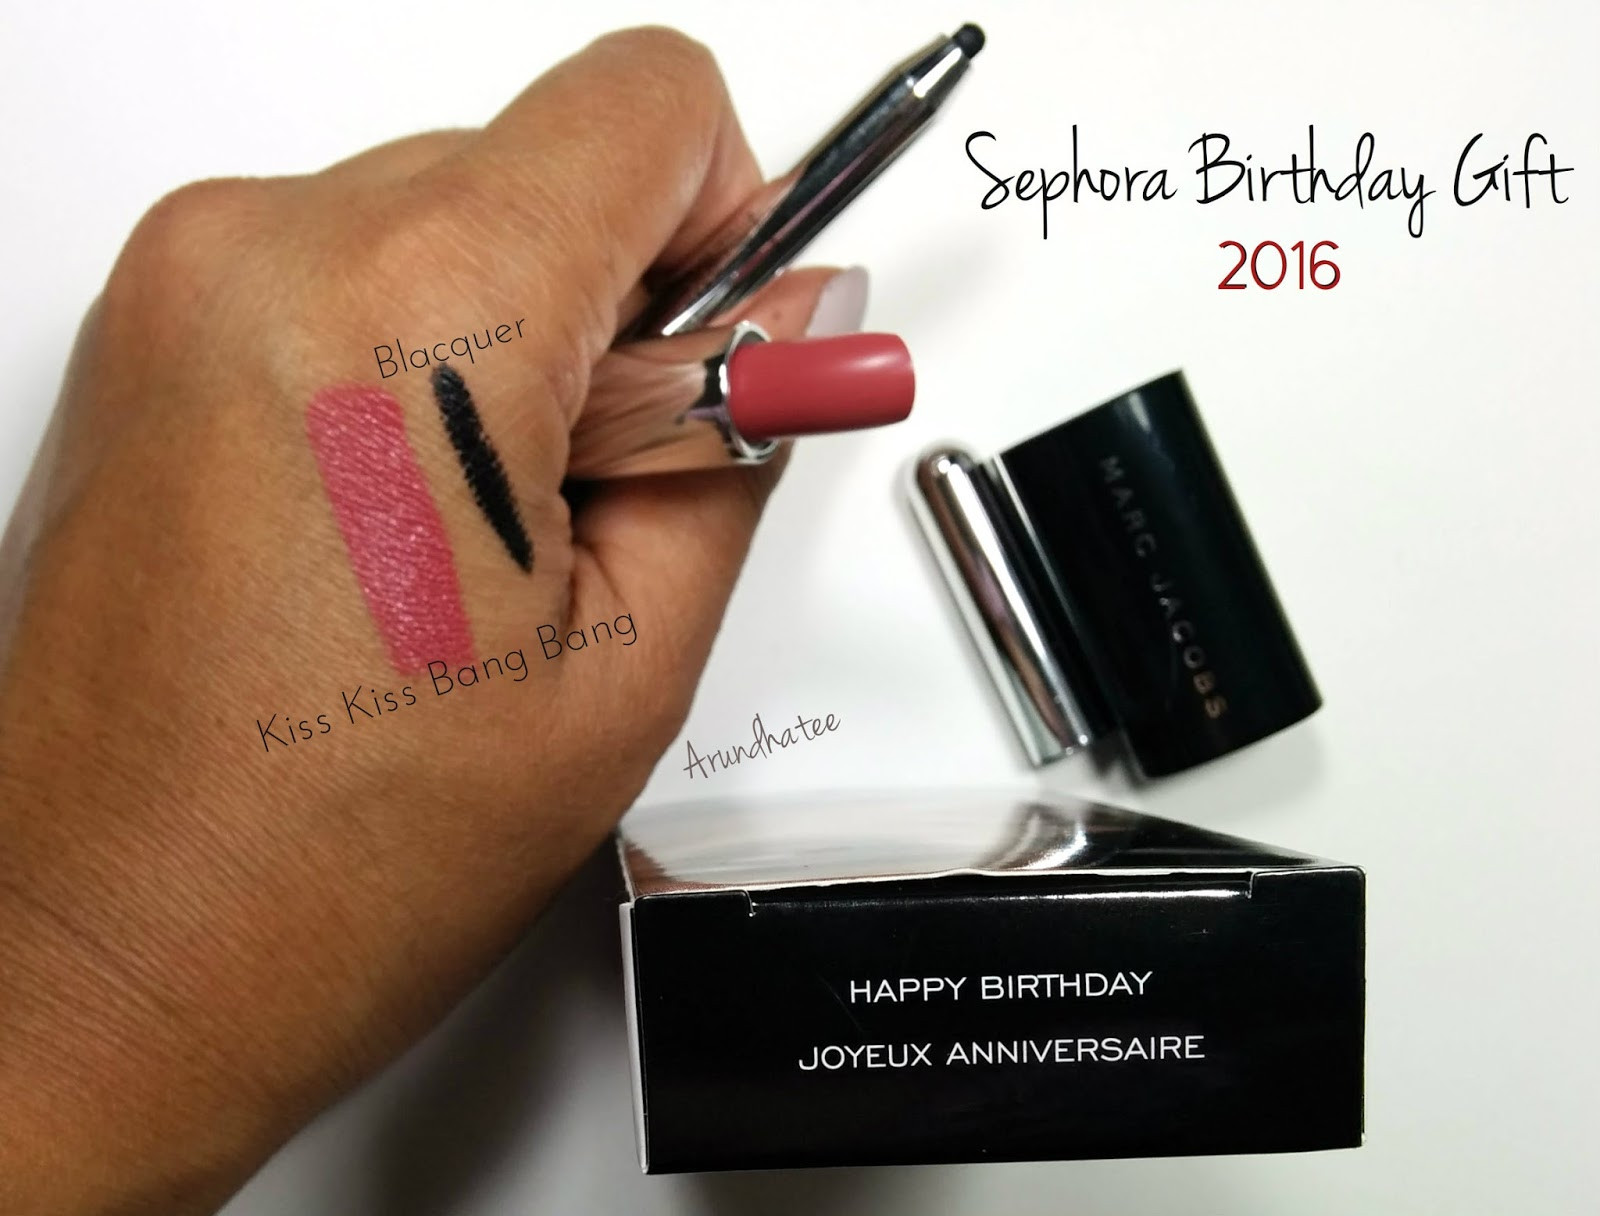 Sephora Birthday Gift Online
 Discovering me Sephora Birthday Gift 2016